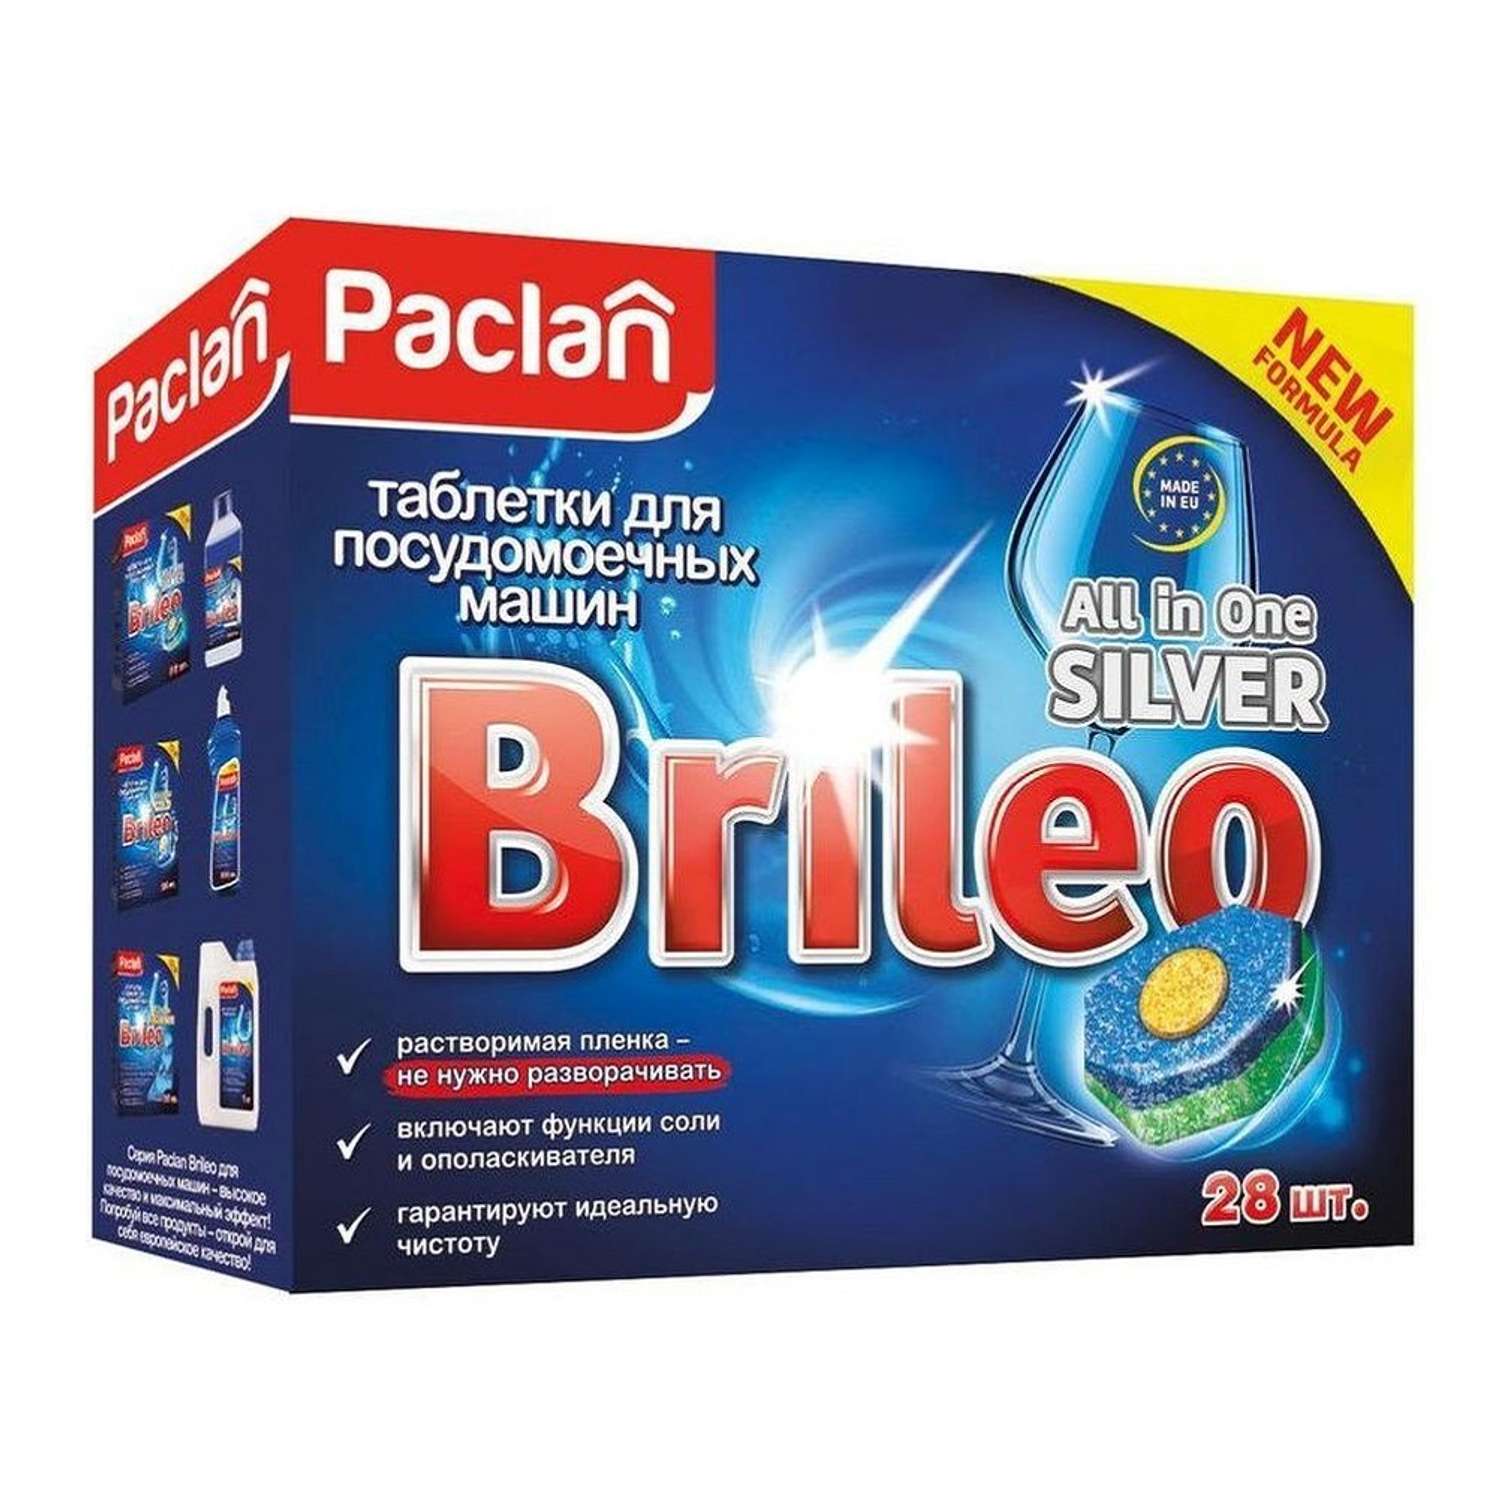 Таблетки Paclan Brileo для посудомоечных машин All in one Silver 28 шт - фото 1